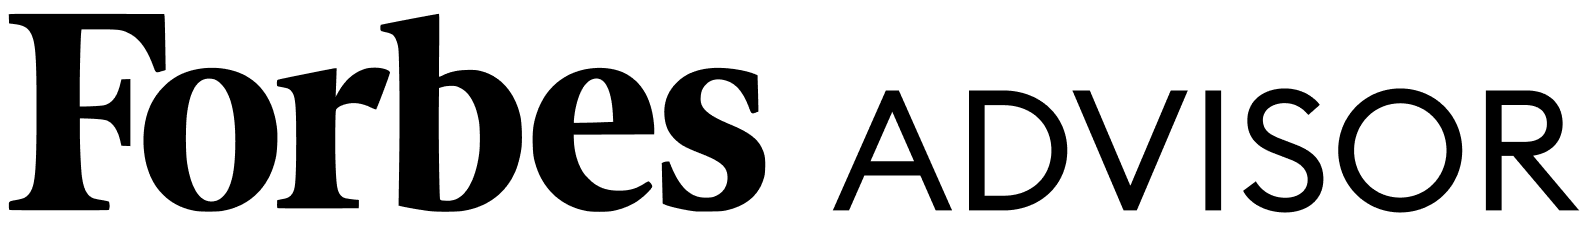 forbes-pp-loans logo